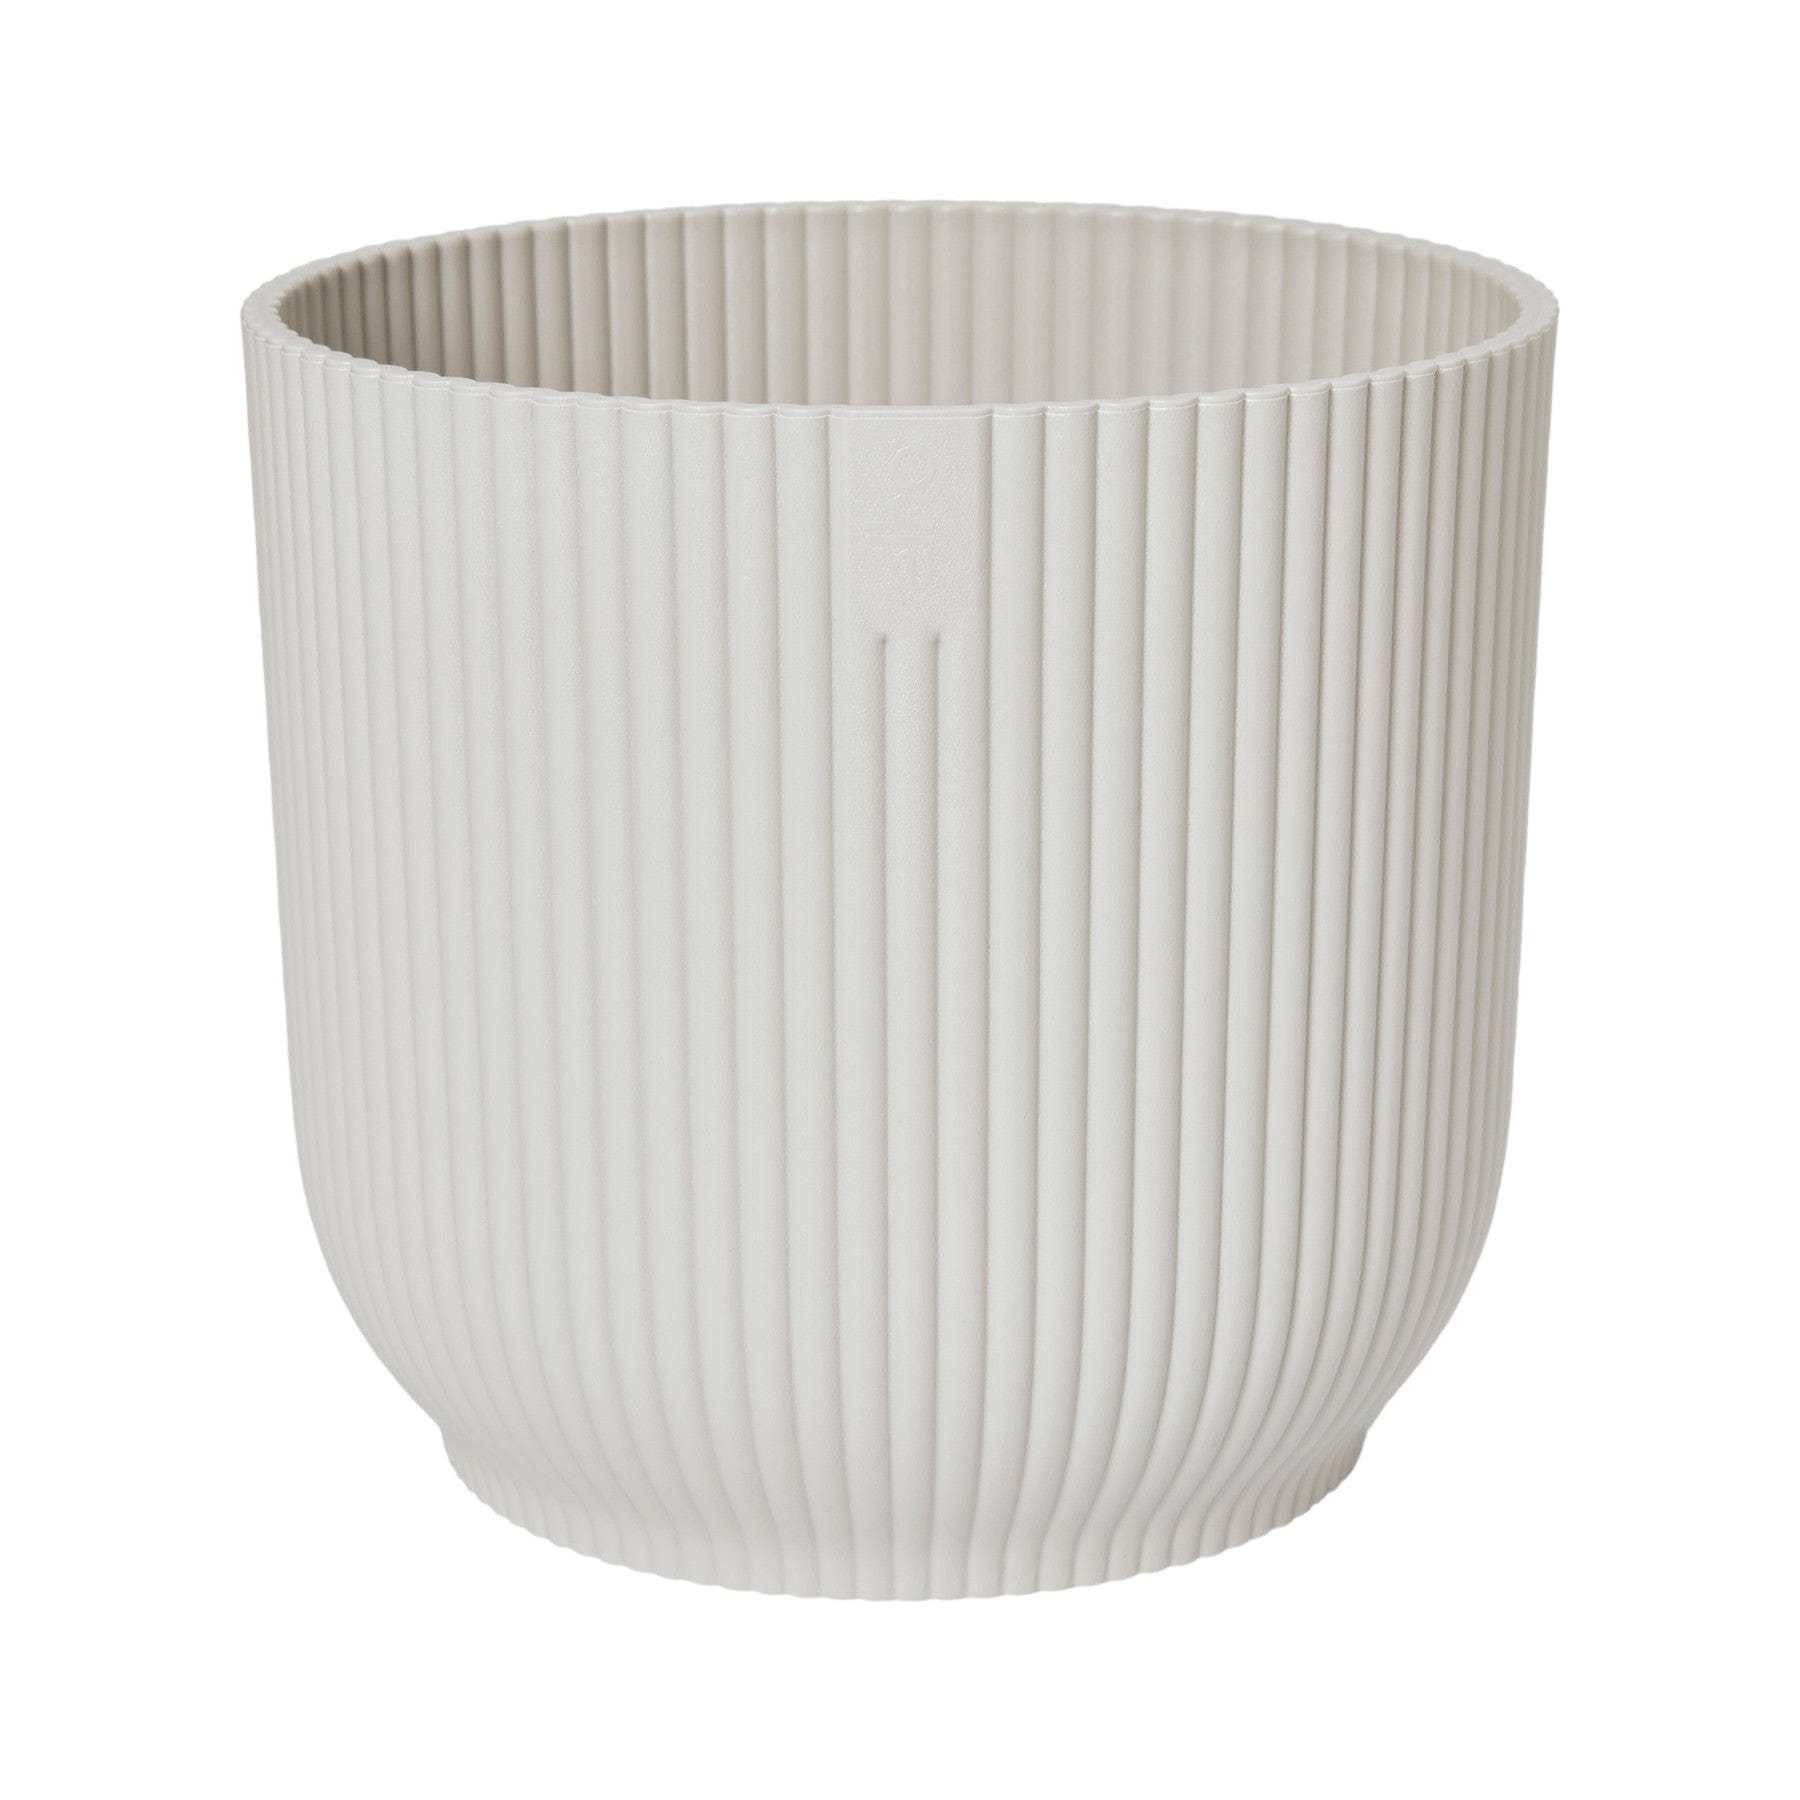 White modern ceramic planter, ribbed texture design, round indoor pot, home decor, neutral color, no plant